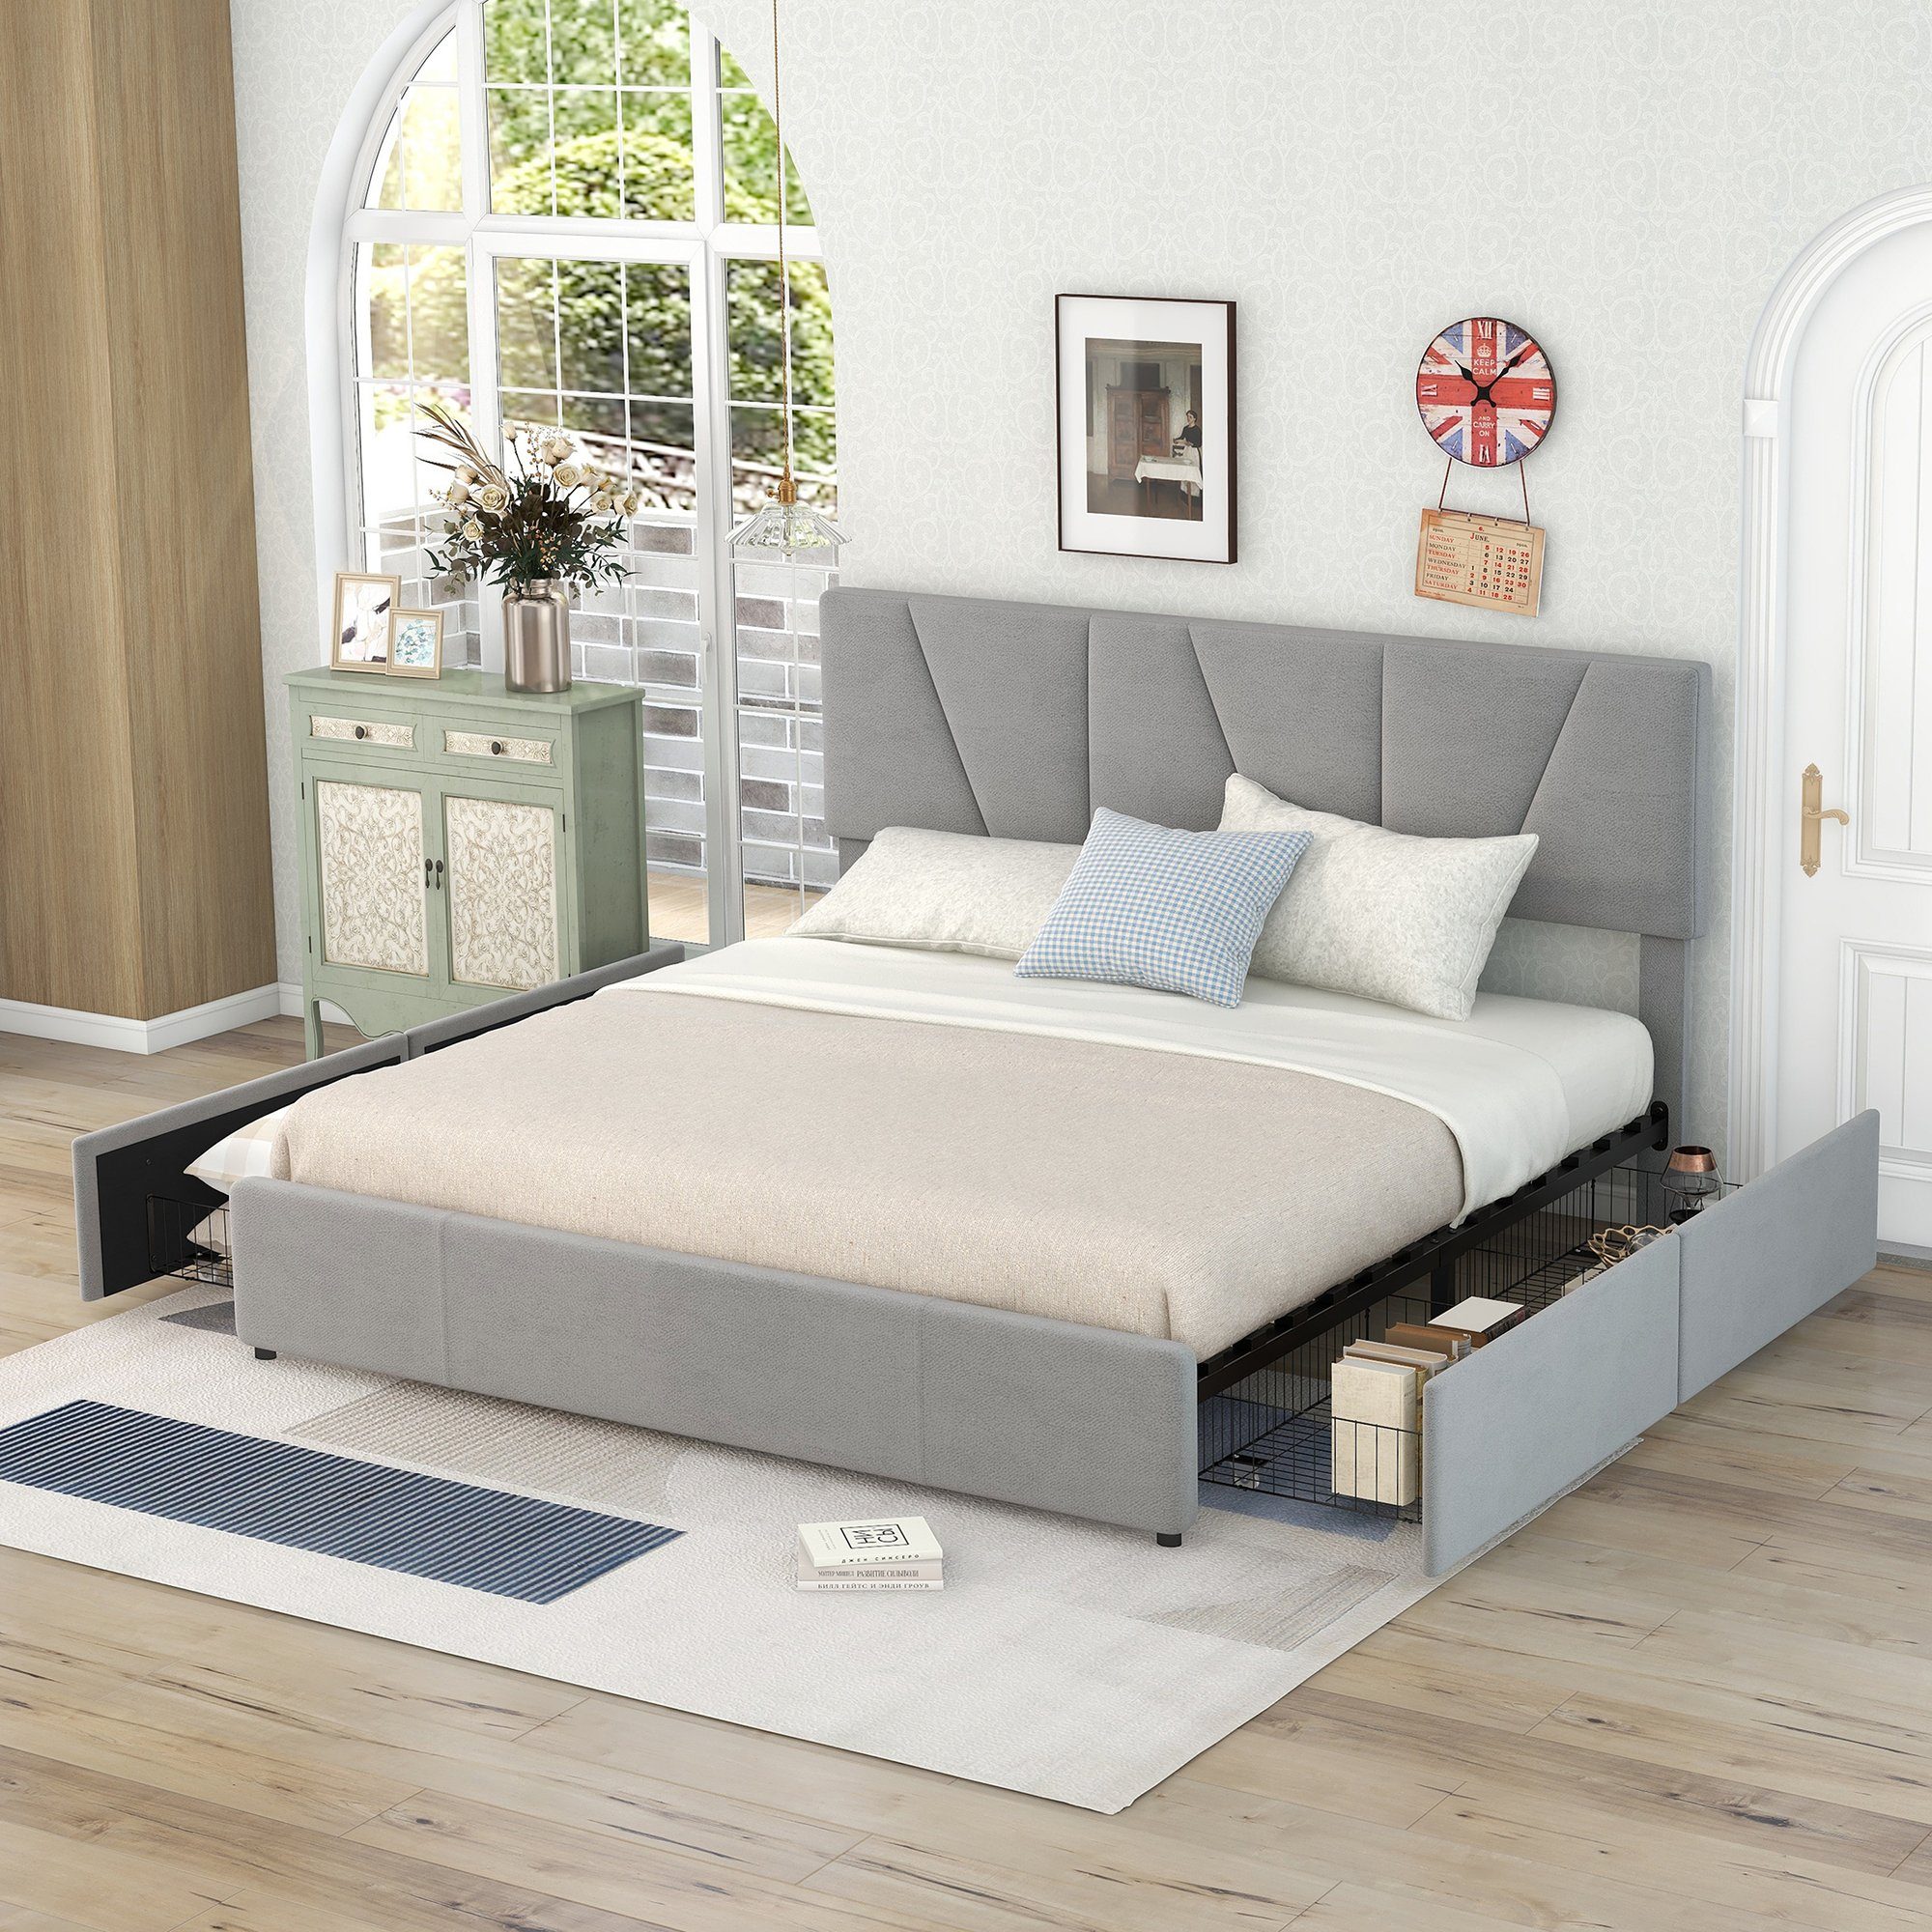 Ulife Polsterbett Doppelbett Samtbett verstellbares Kopfteil (Bett mit 4 Schubladen), 160 × 200cm